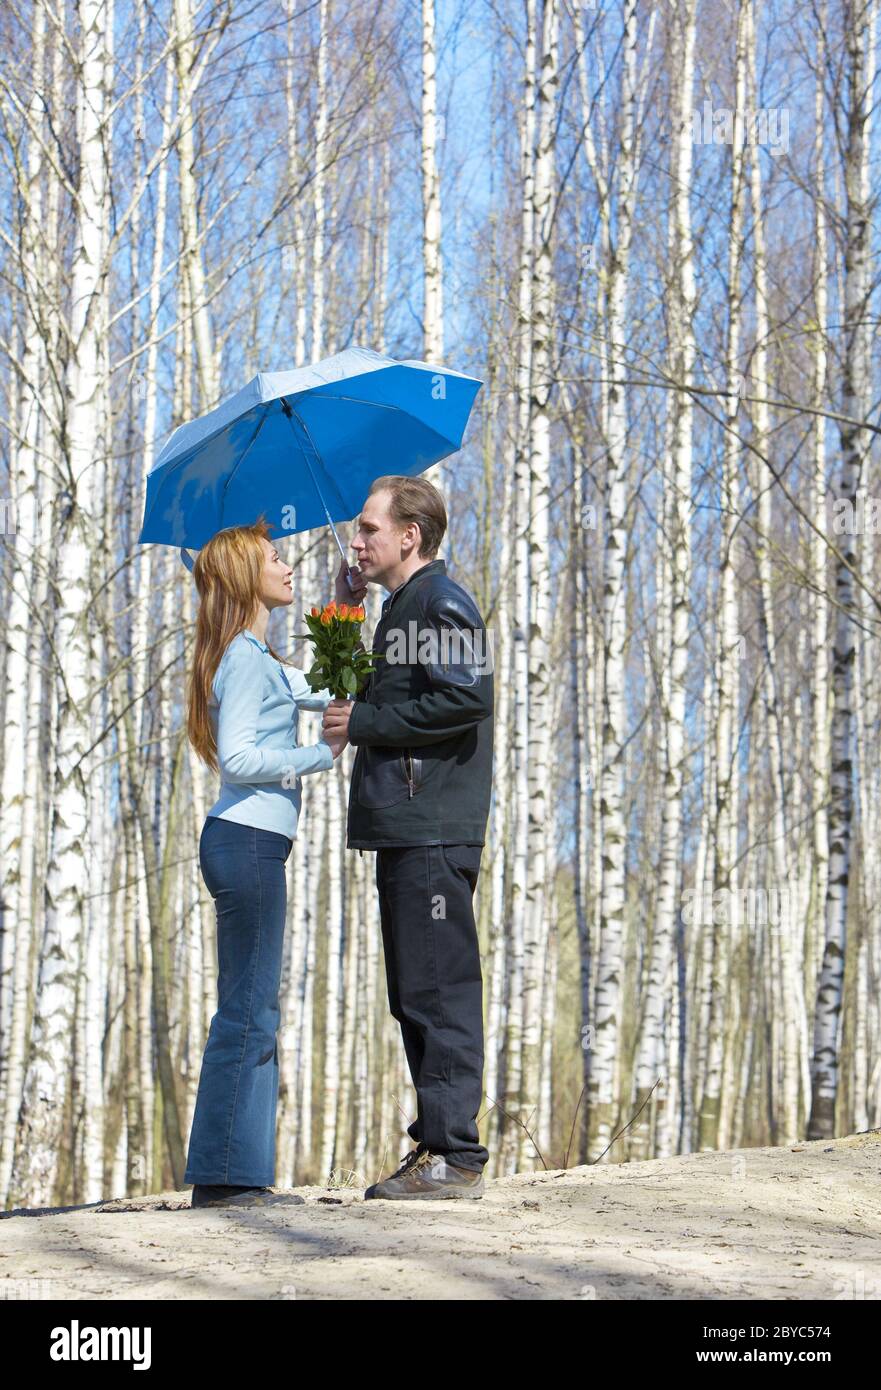 Man gives girl bouquet under umbrella among birche Stock Photo